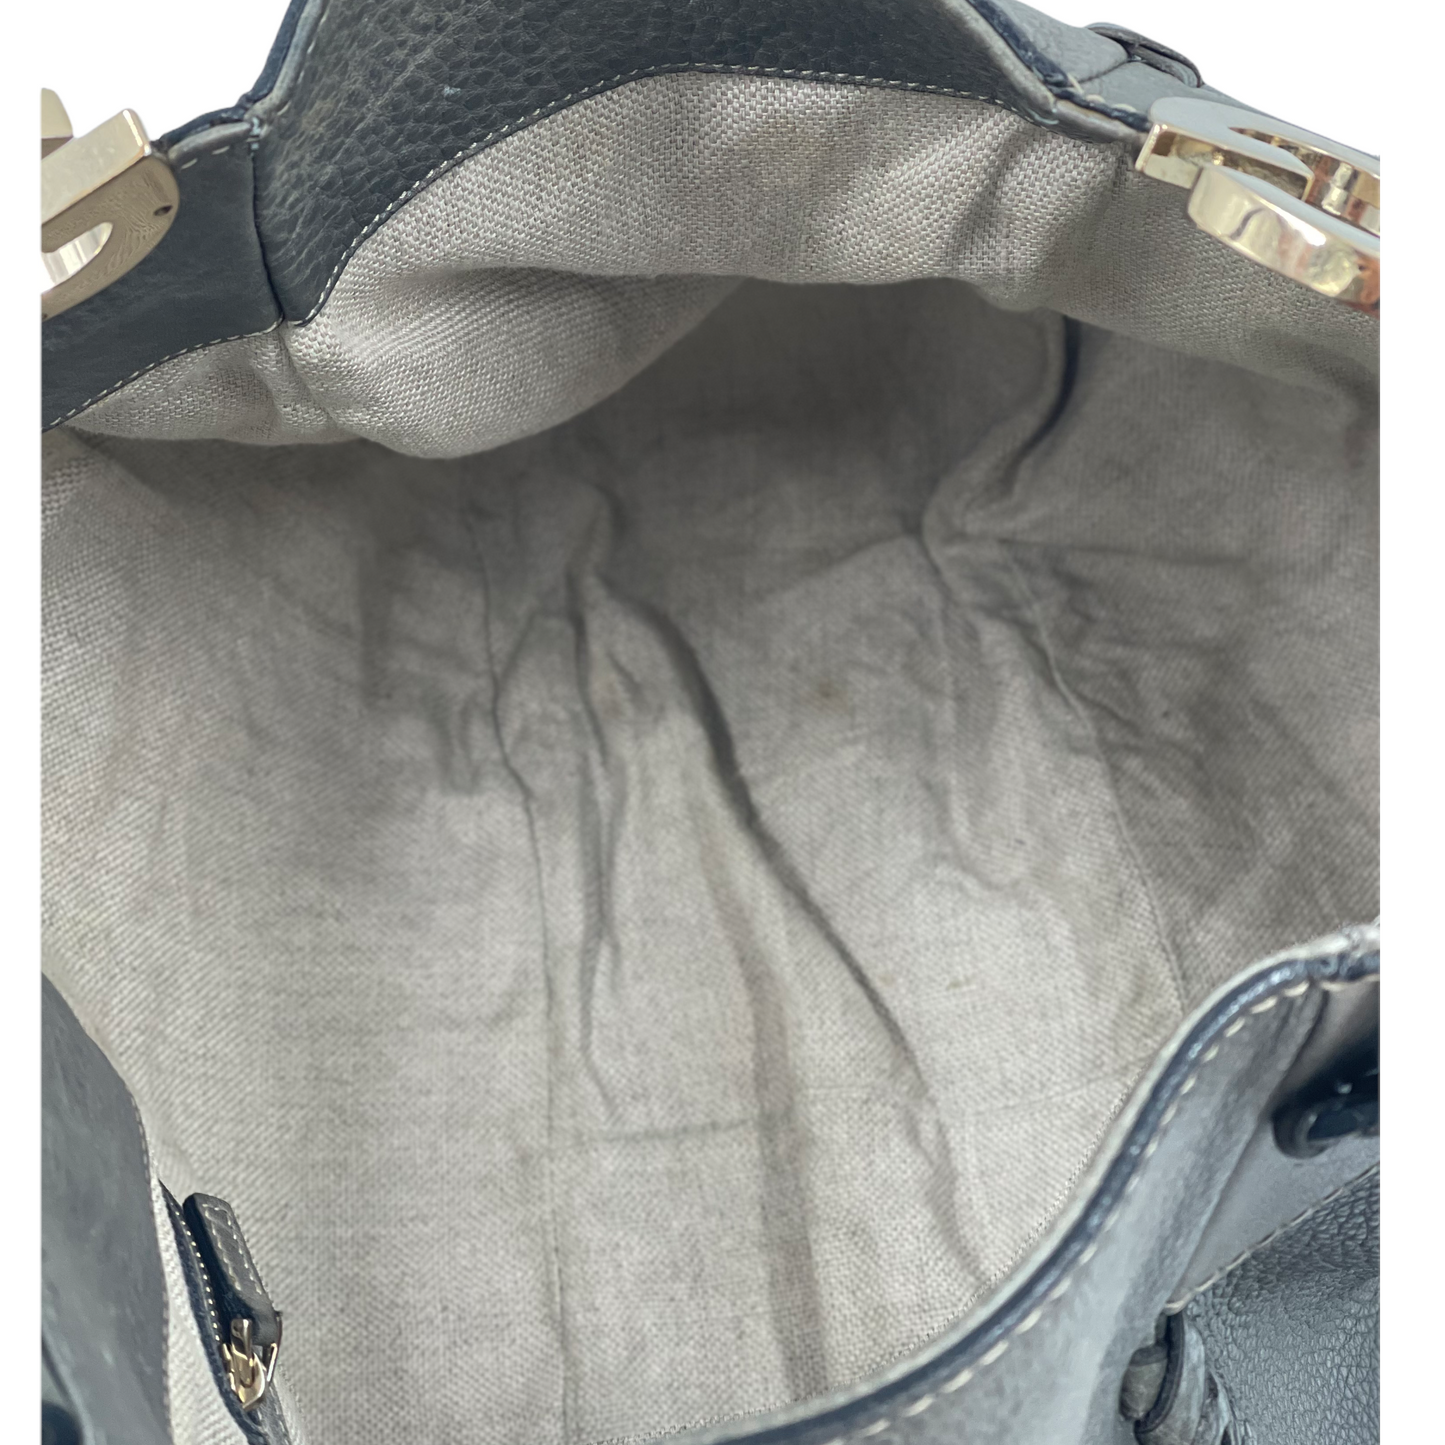 Gucci Charlotte Braided Leather Bag Grey